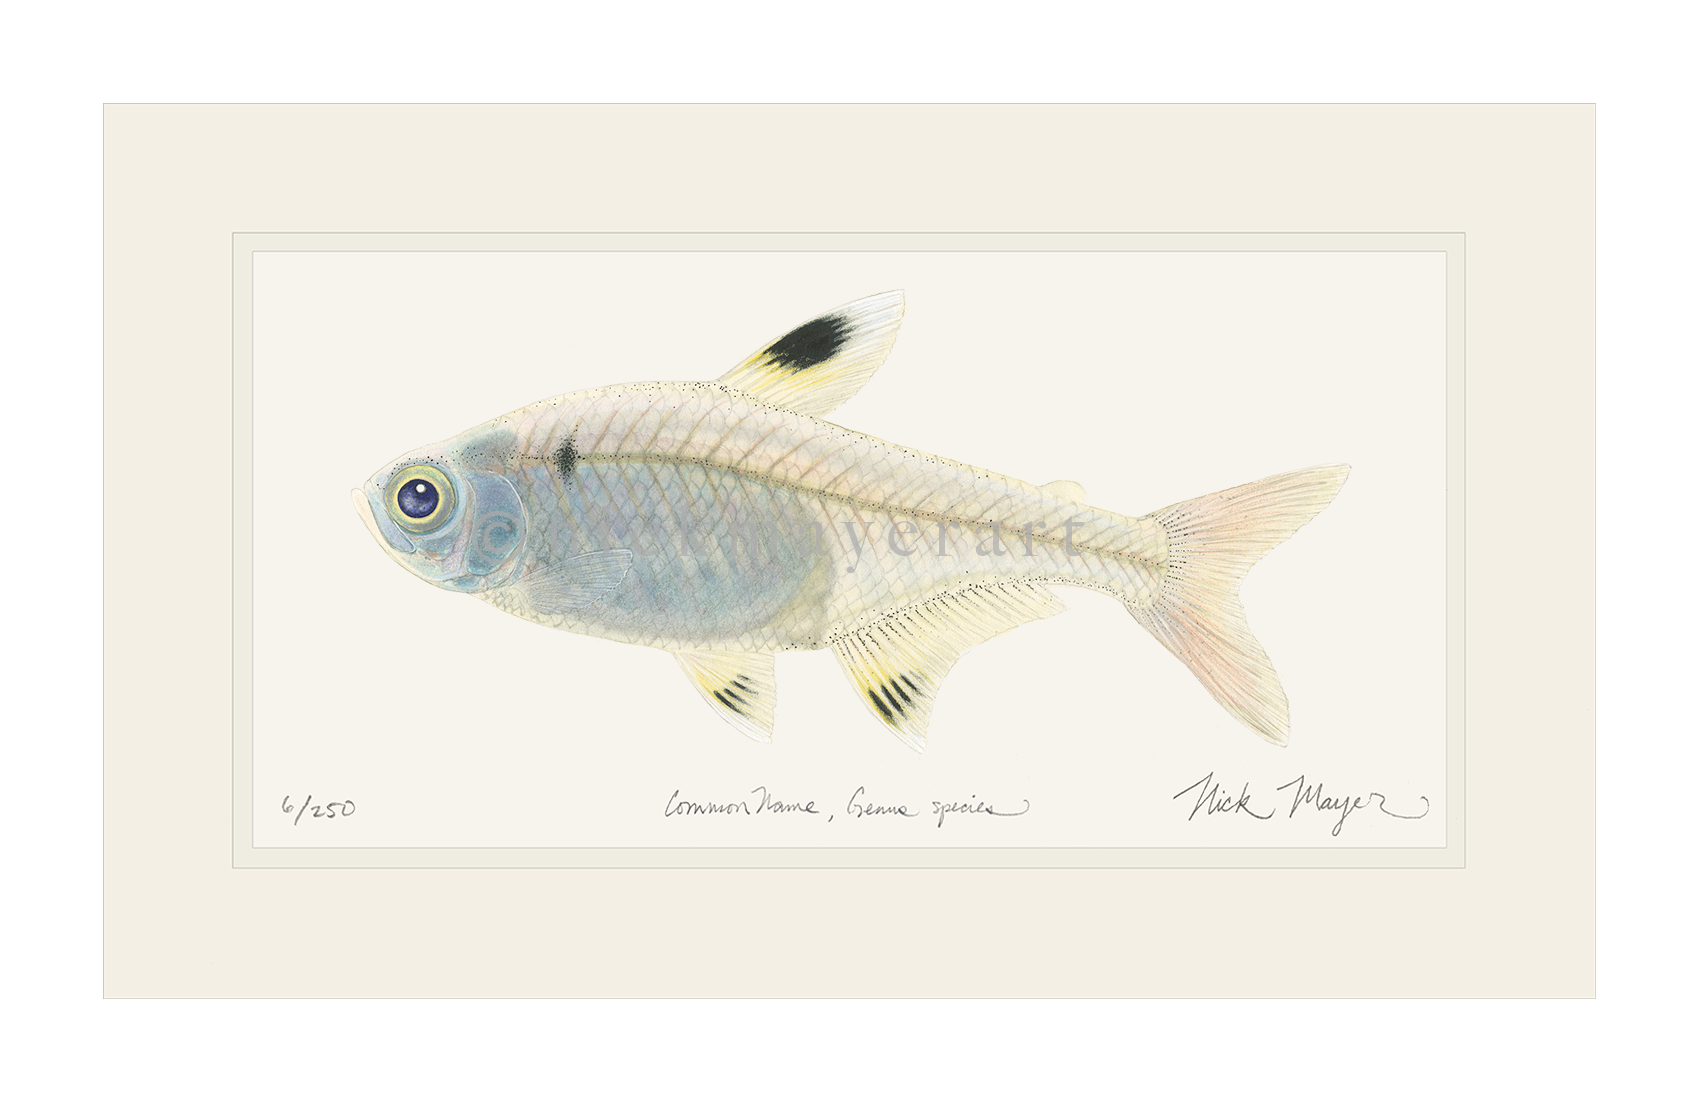 X-ray Fish Print - Transparent Fish from Fish ABCs